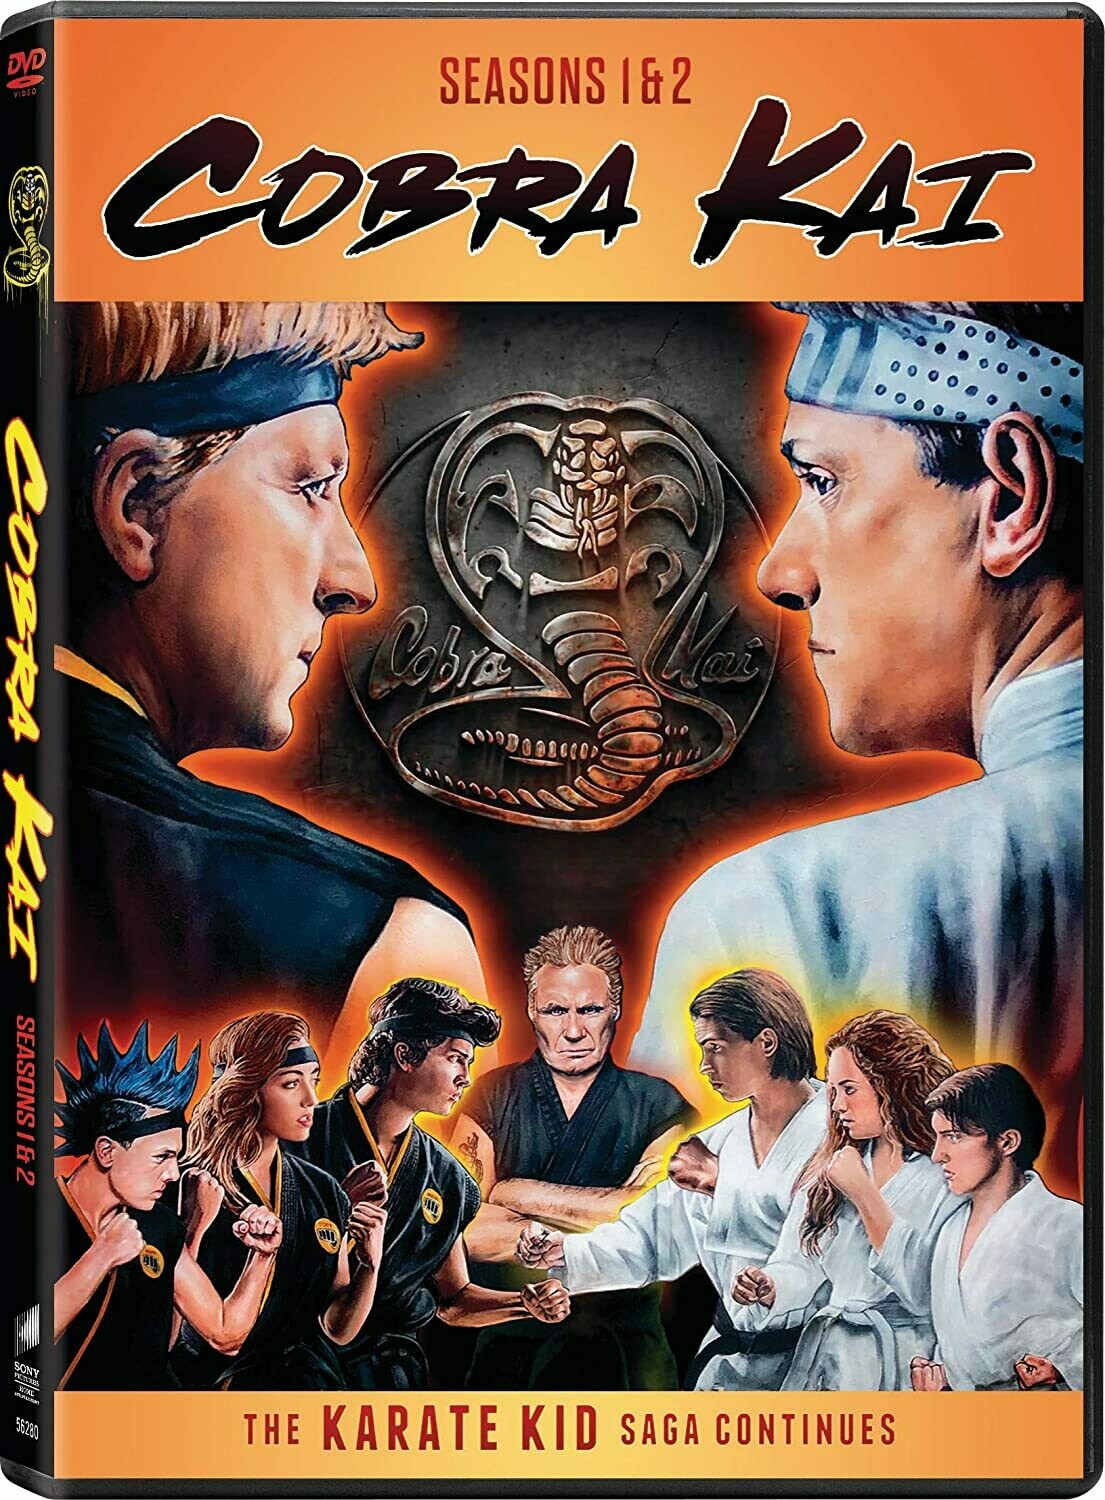 Cobra Kai - Seasons 1 & 2 (7 day rental)